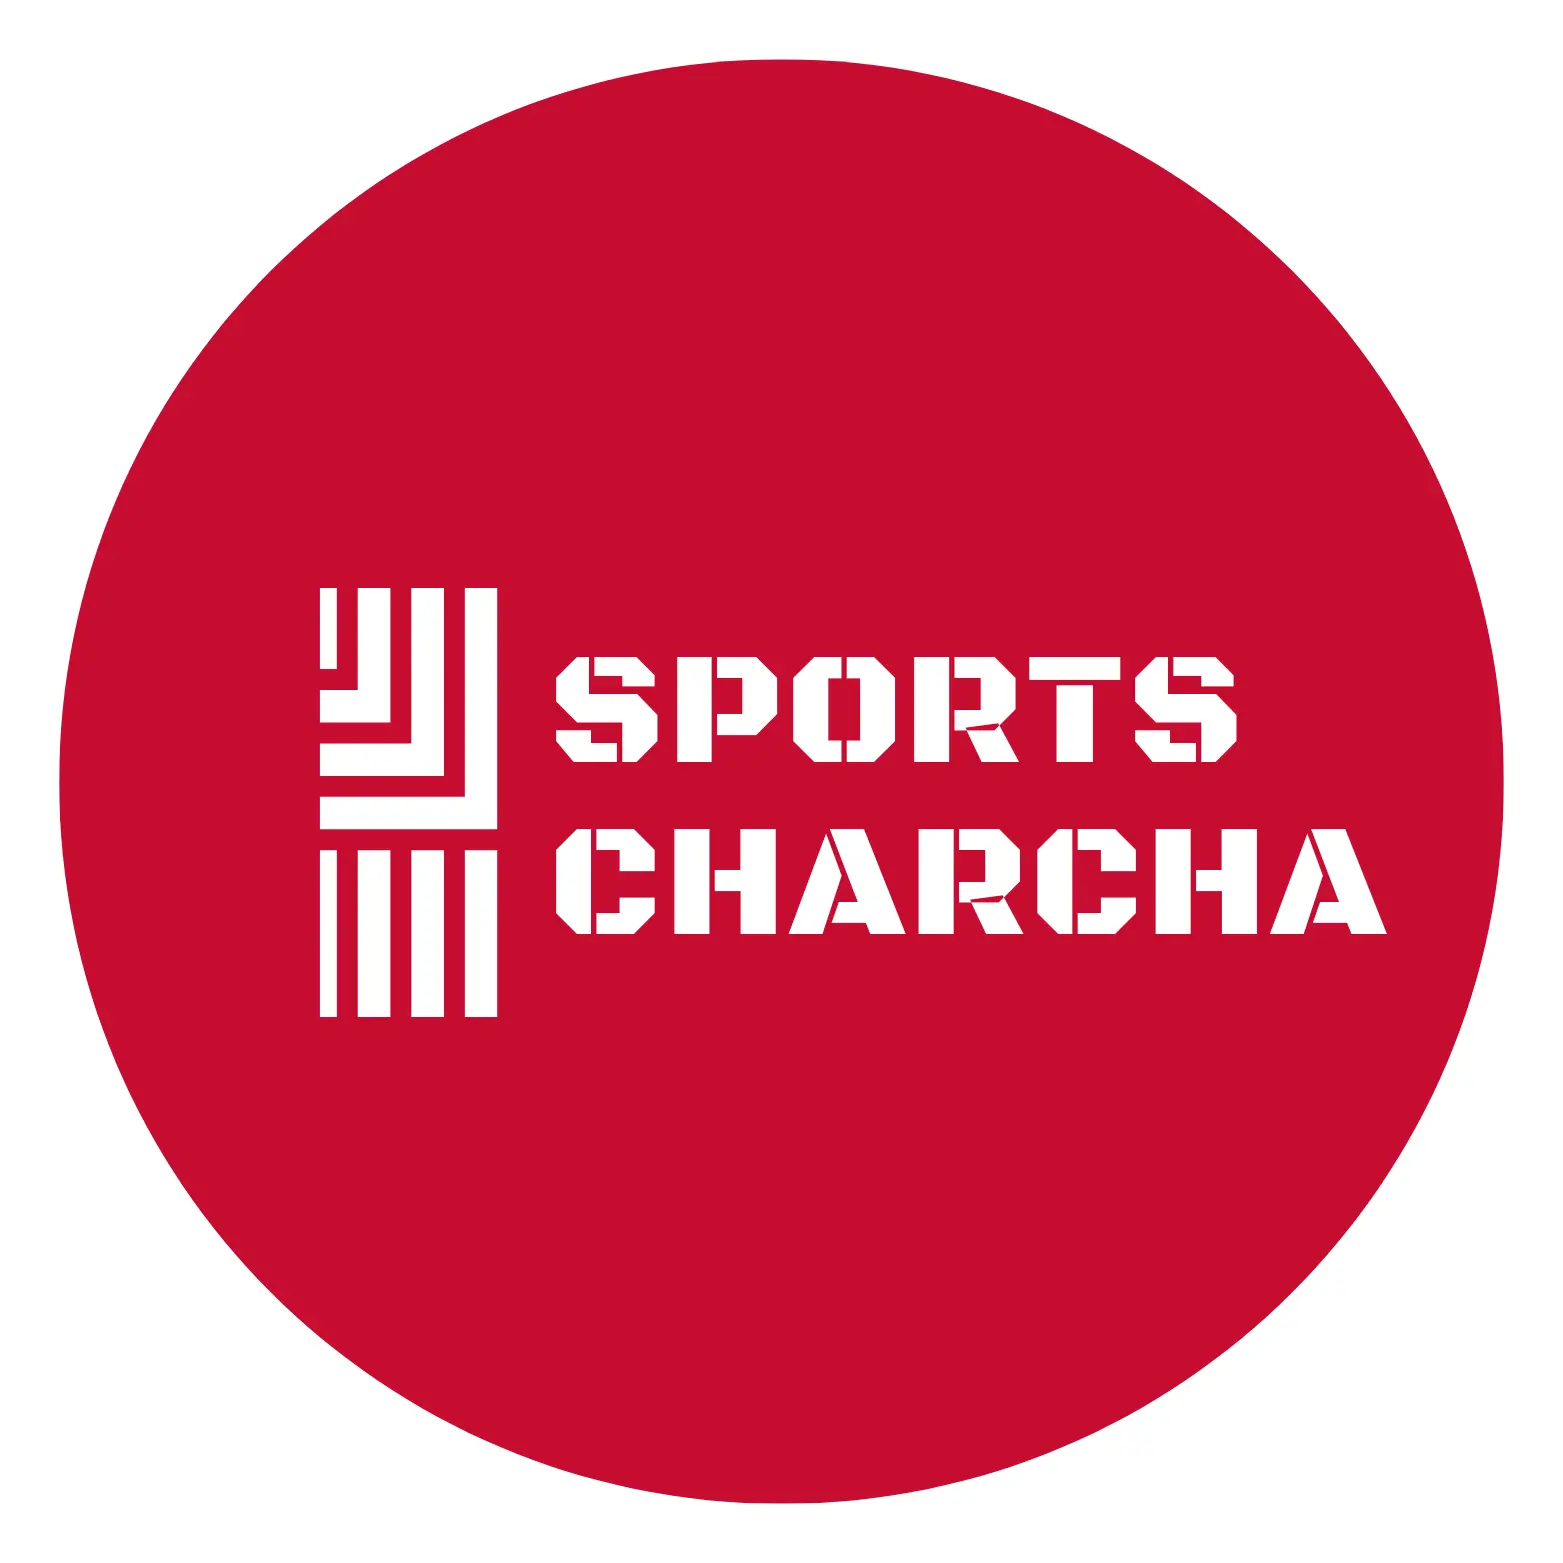 Sports Charcha